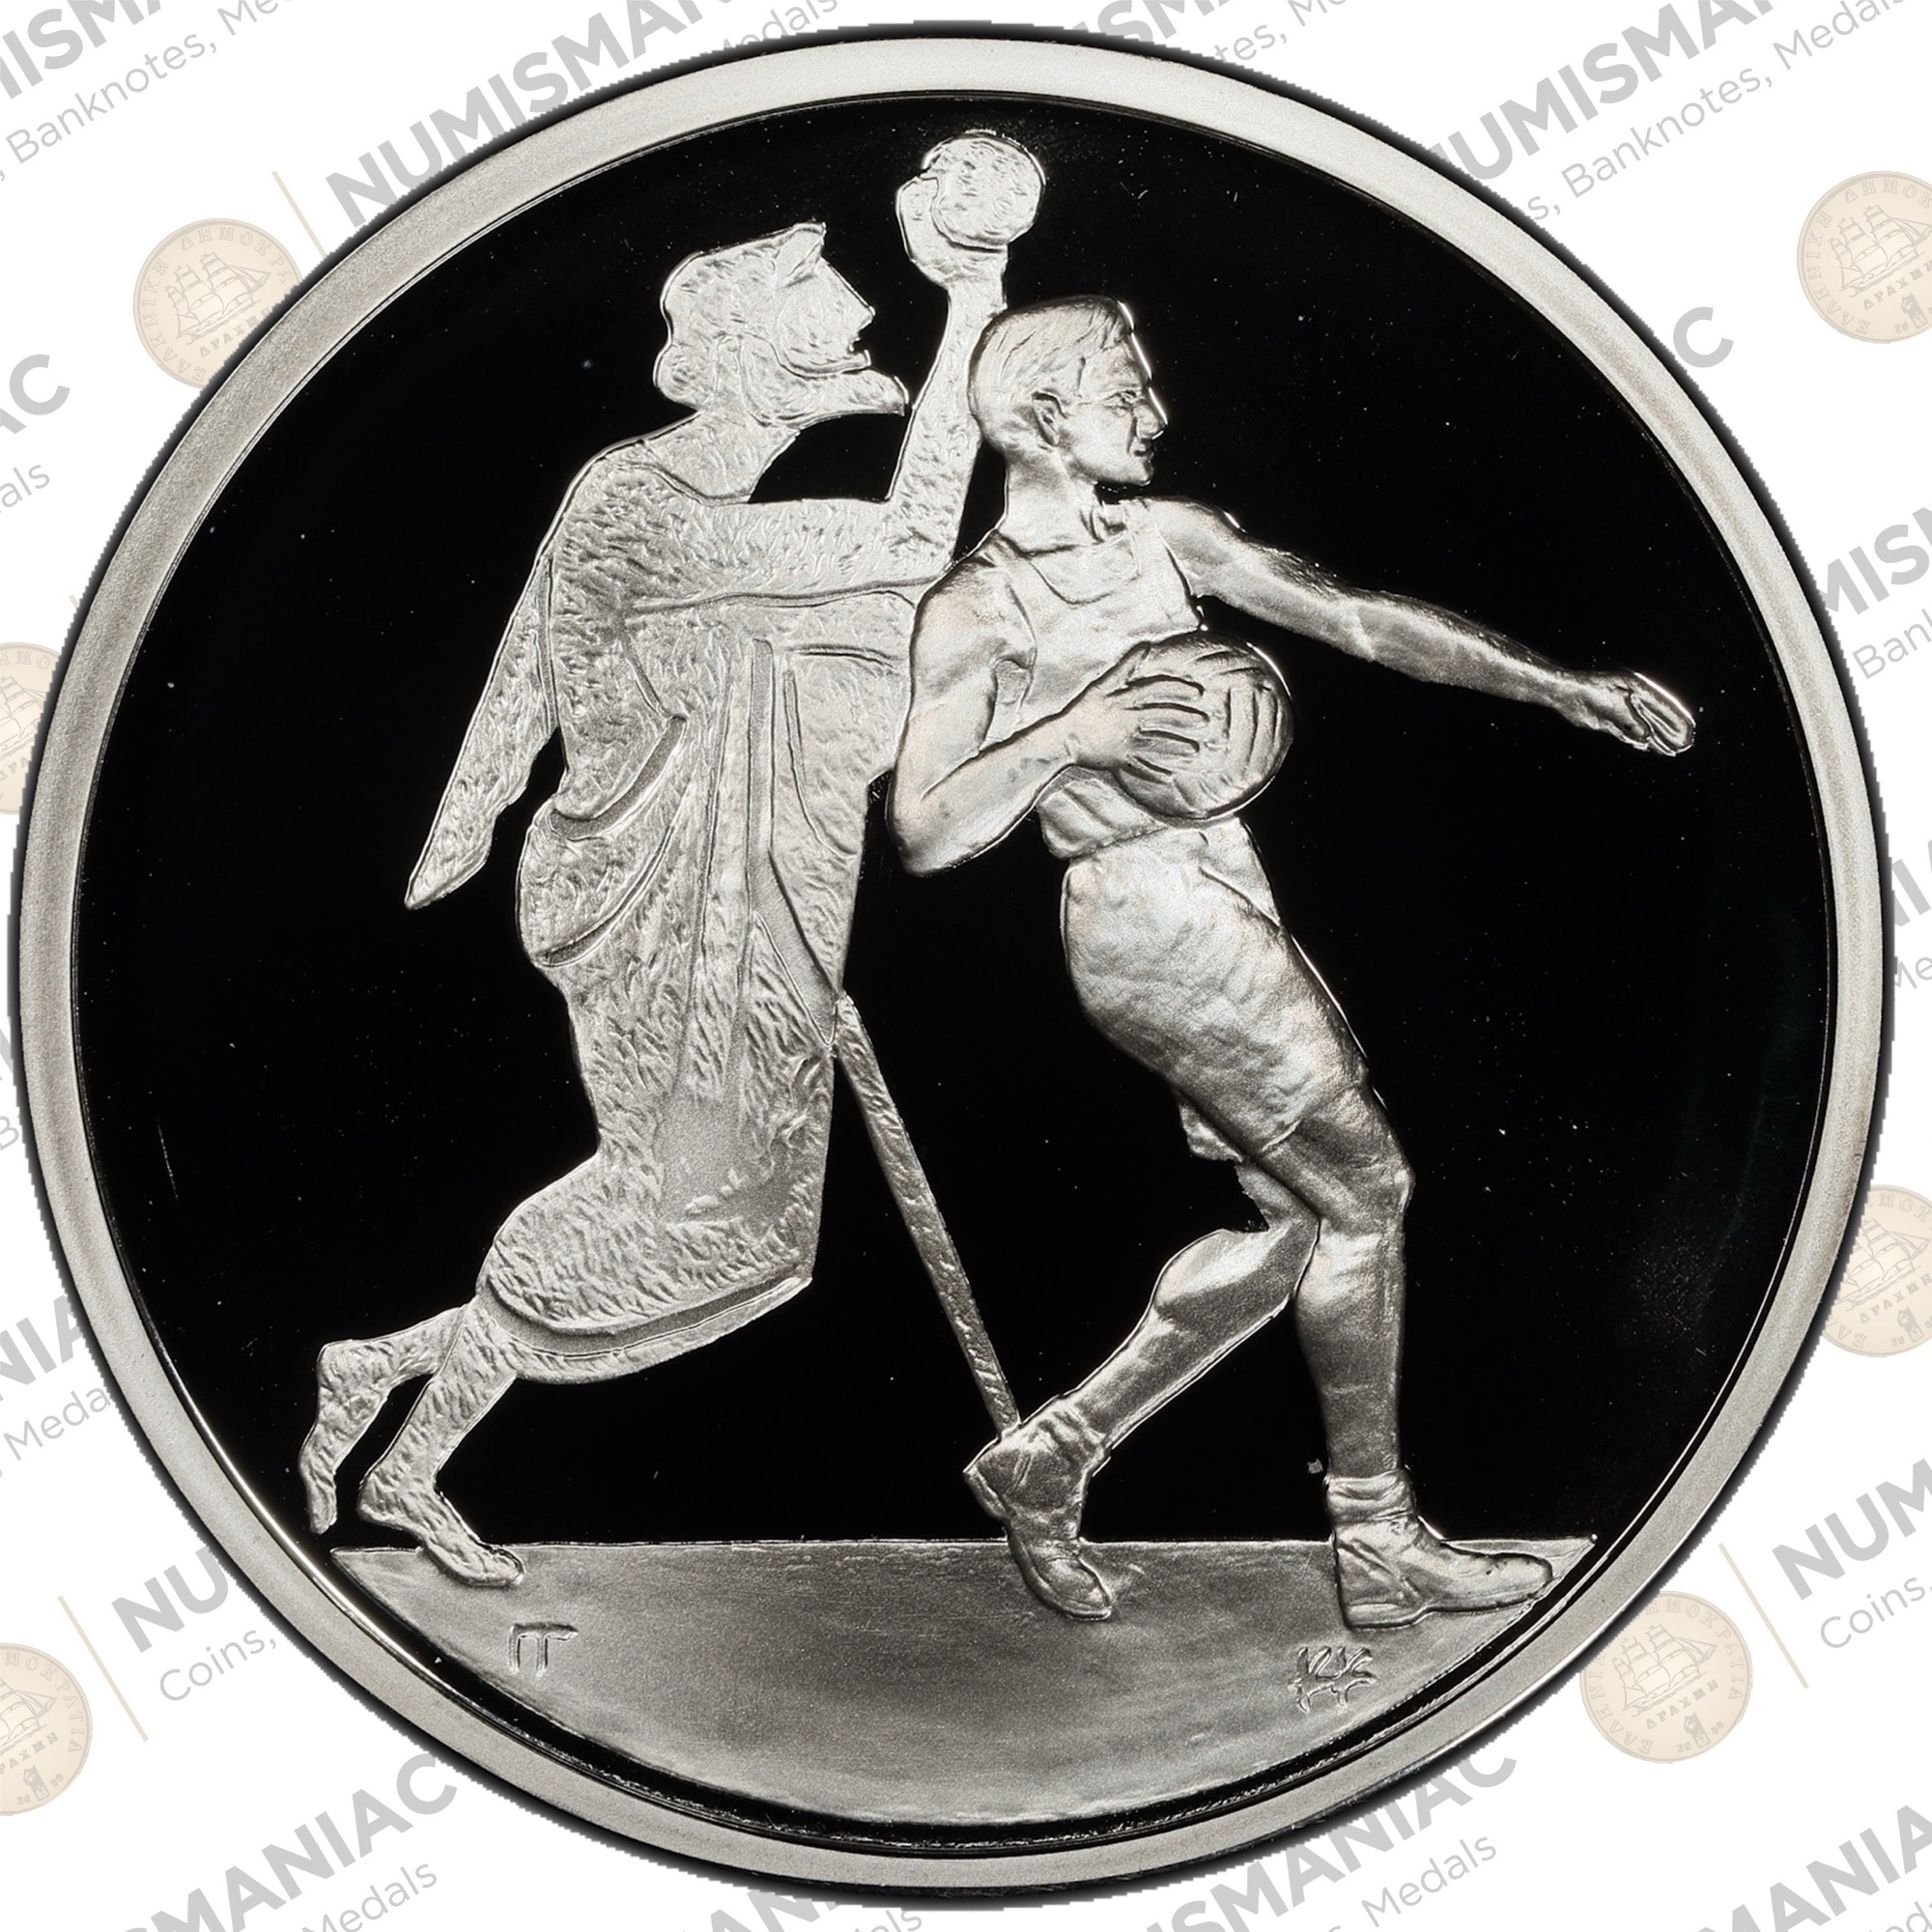 Greece 🇬🇷 10 Euro 2003 "Handball" 1oz Silver Bullion Proof Coin with capsule.A